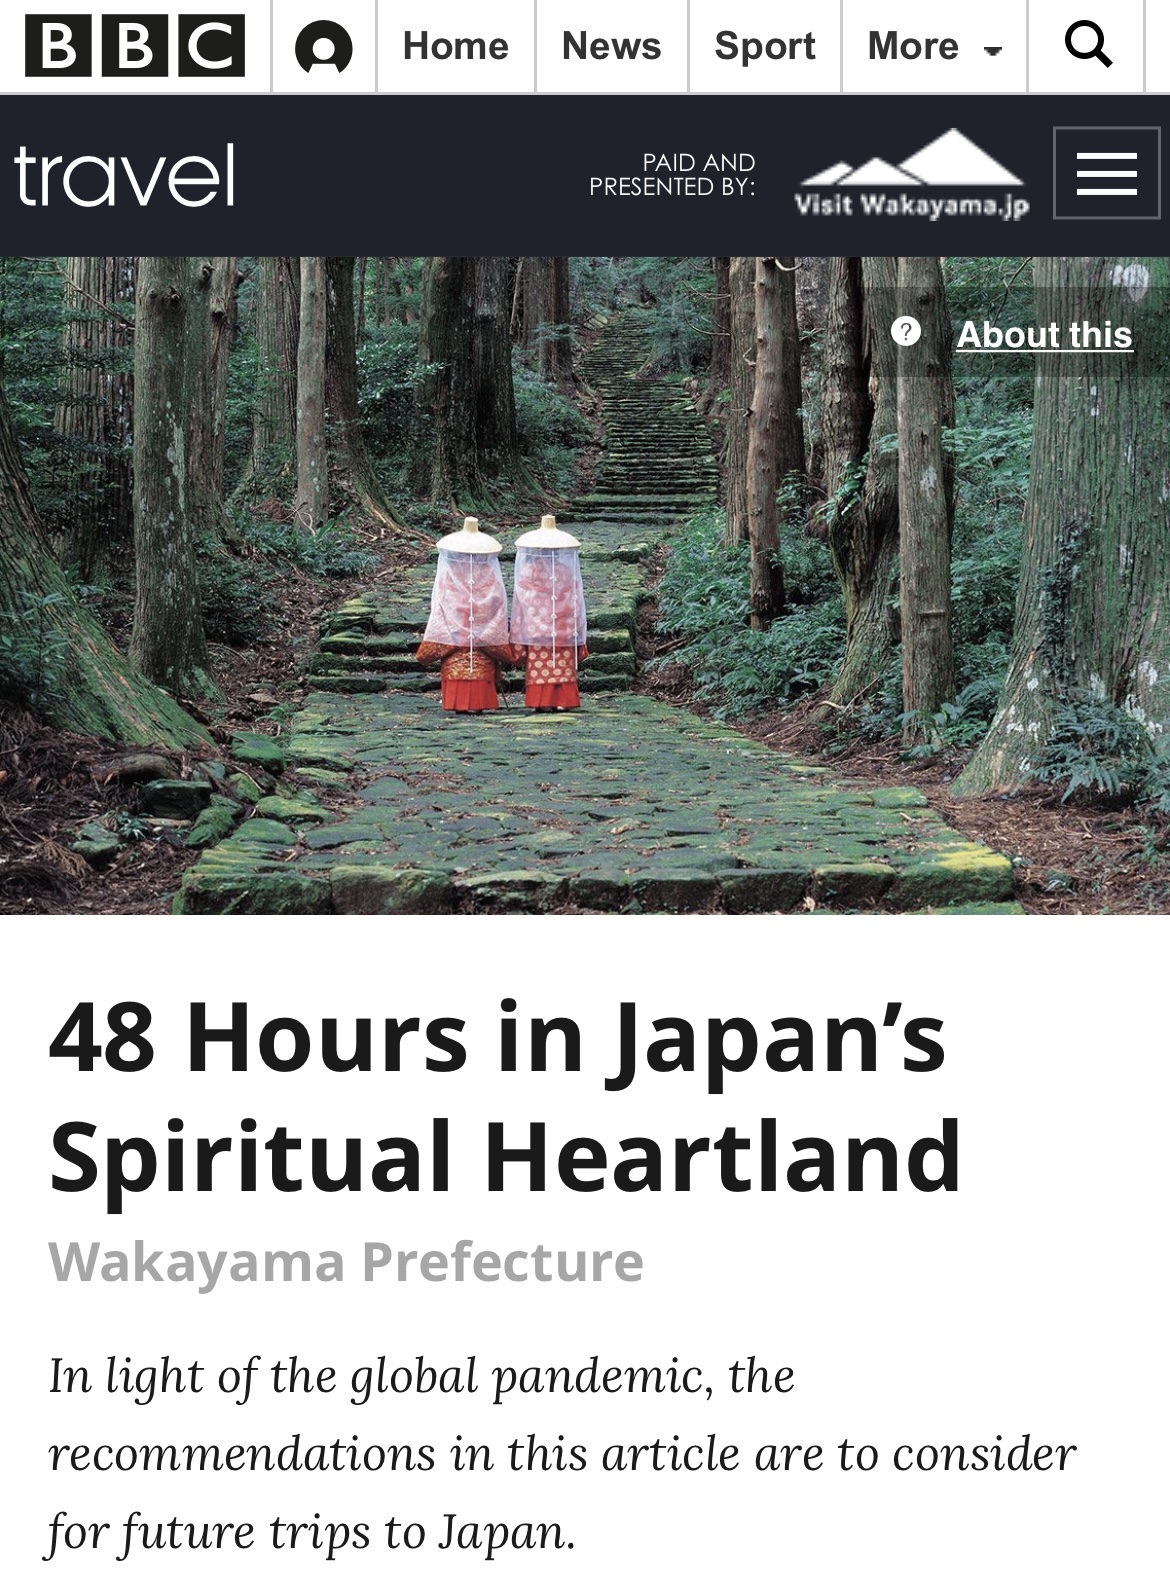 Wakayama Prefecture - World Heritage 15th Anniversary 